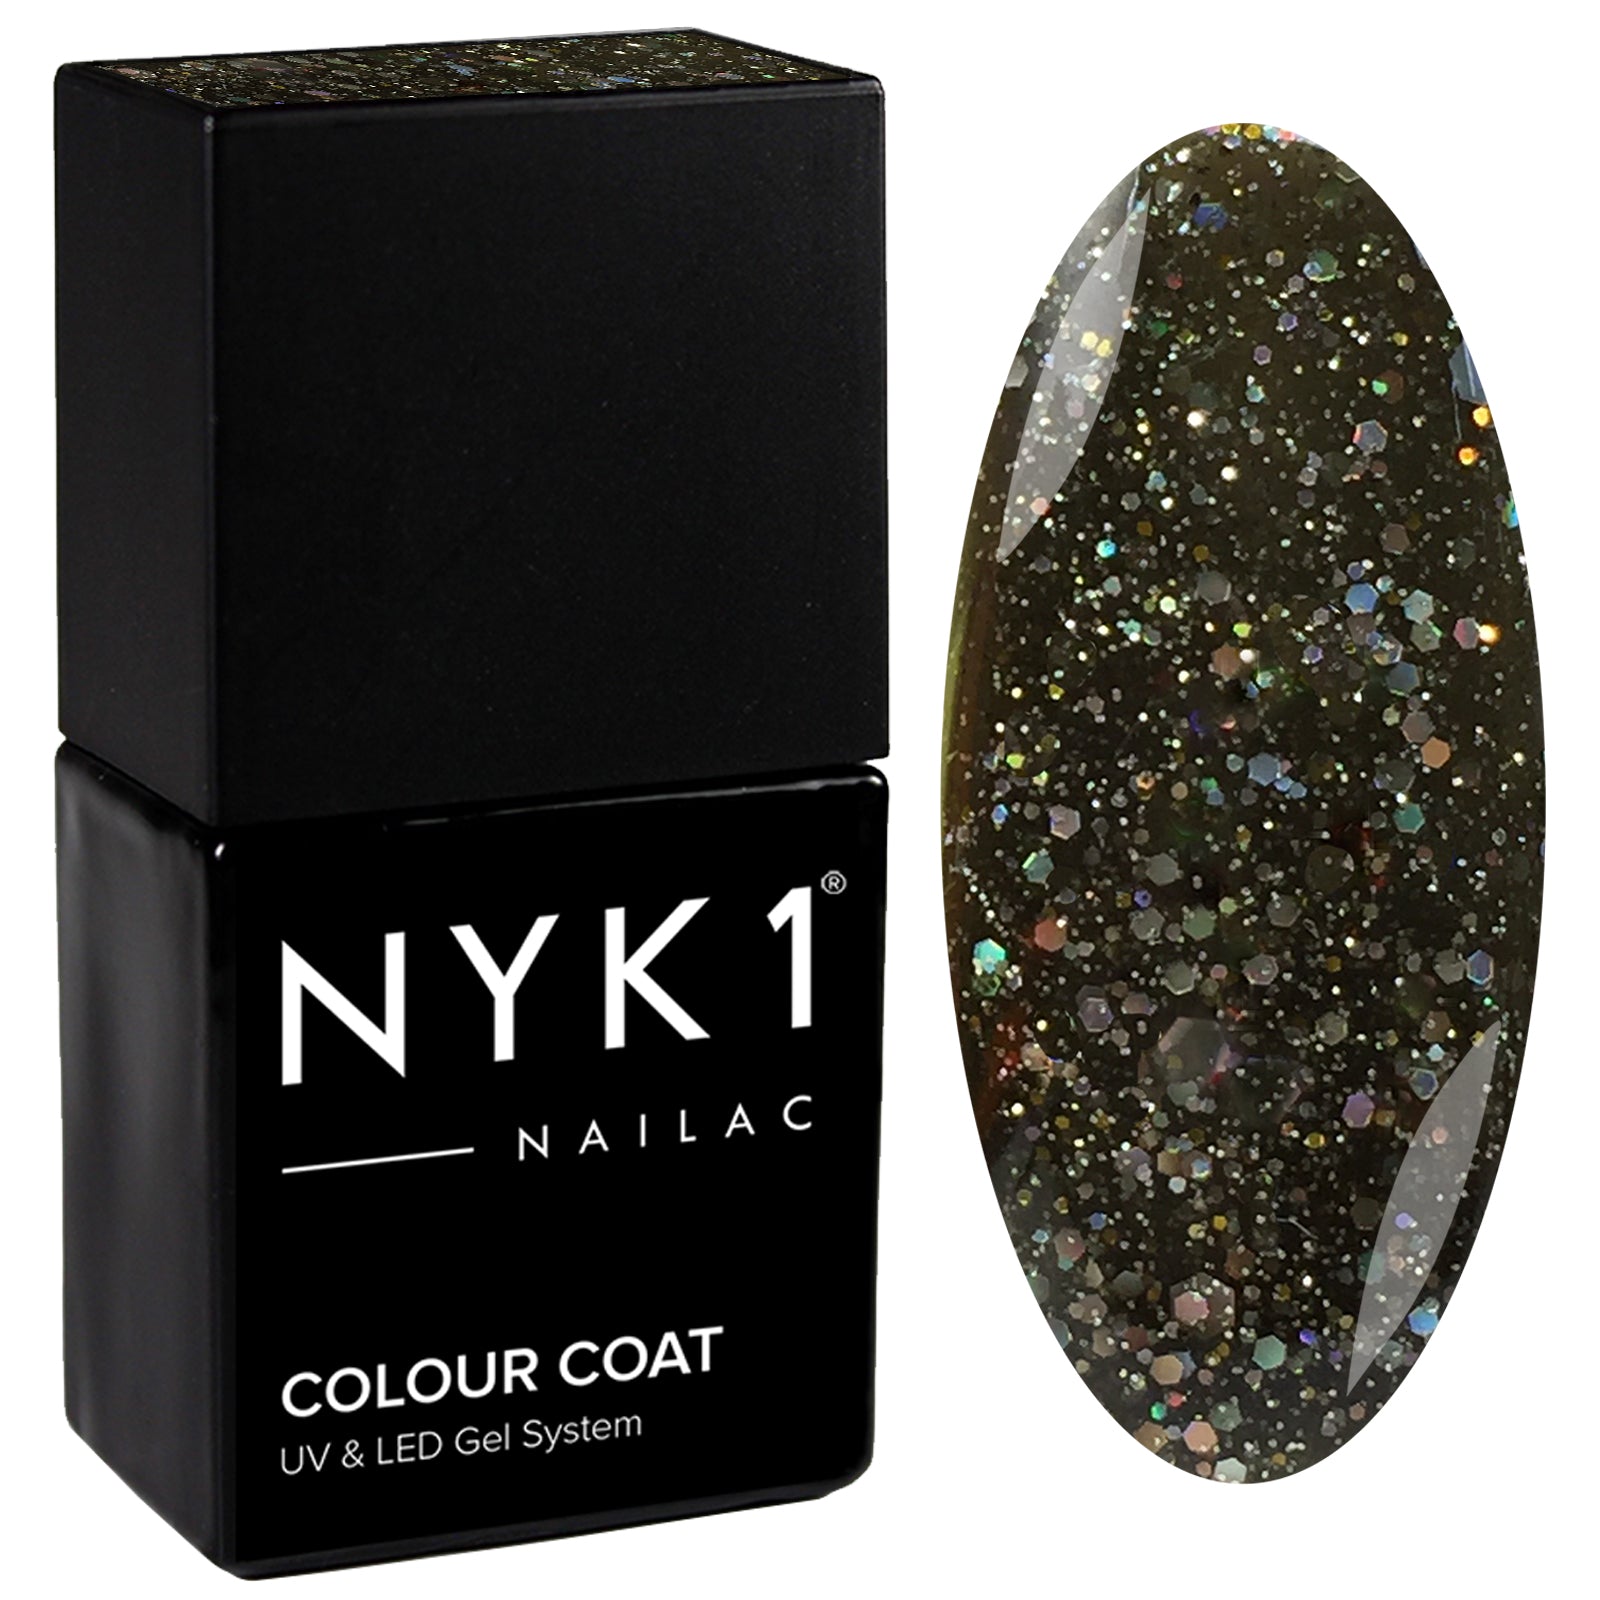 NYK1 Diamond Quartz Black Sparkle Glitter Gel Nail Polish